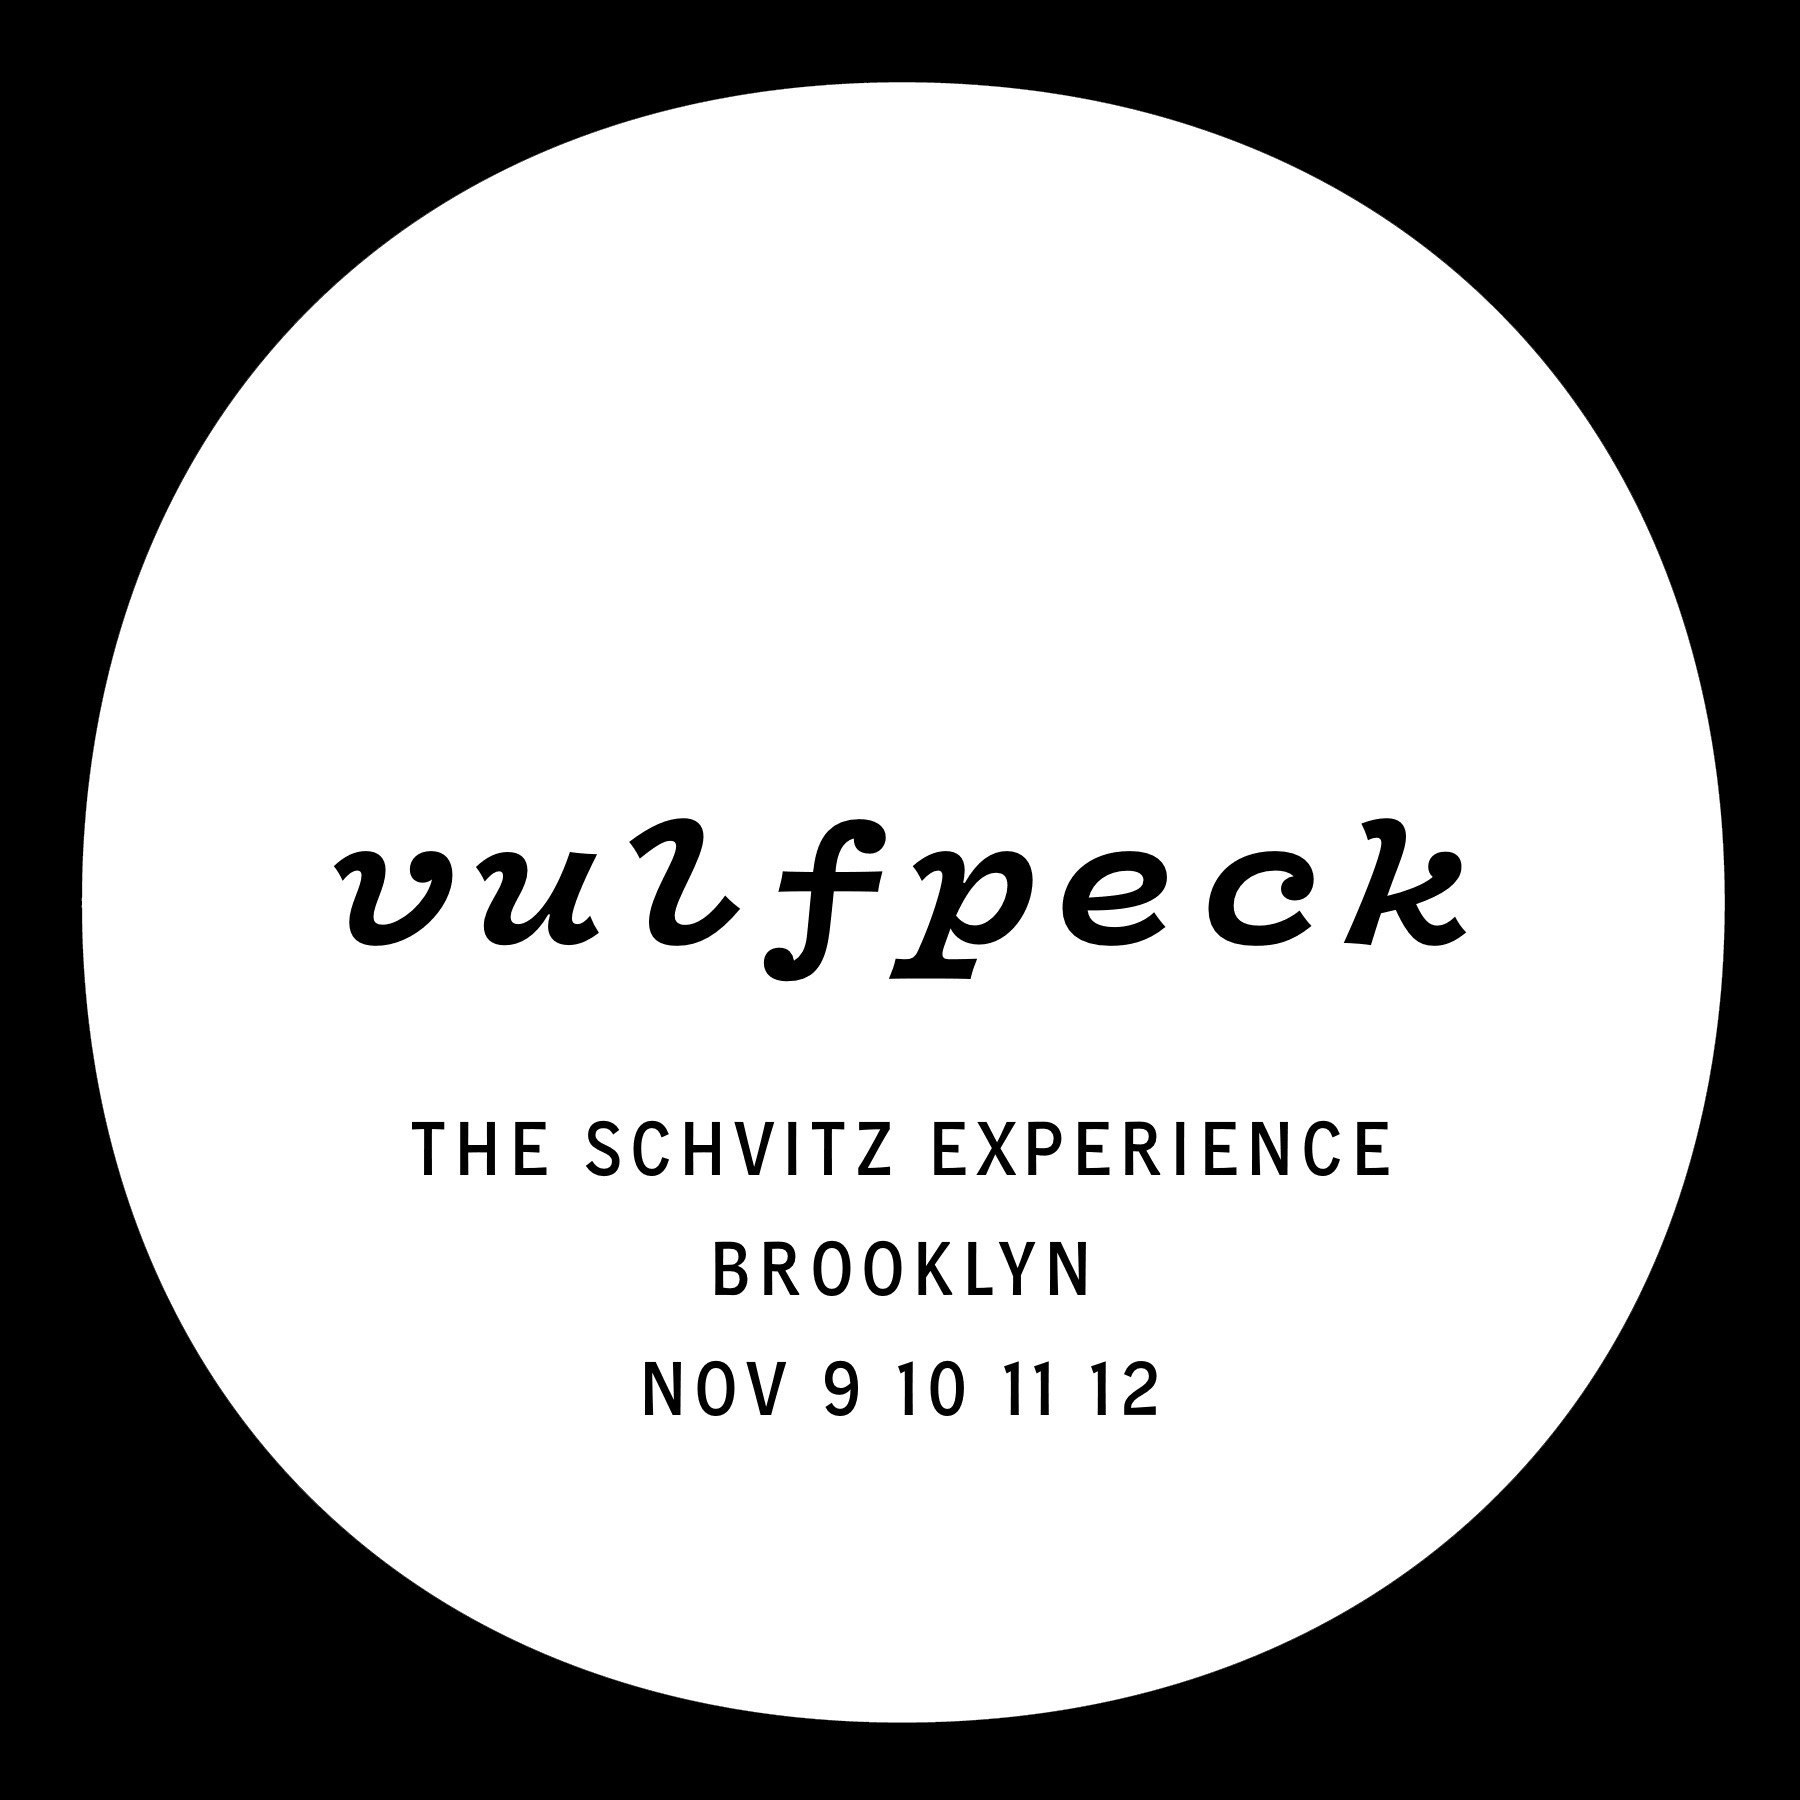 THE VULFPECK SCHVITZ EXPERIENCE - MATINEE